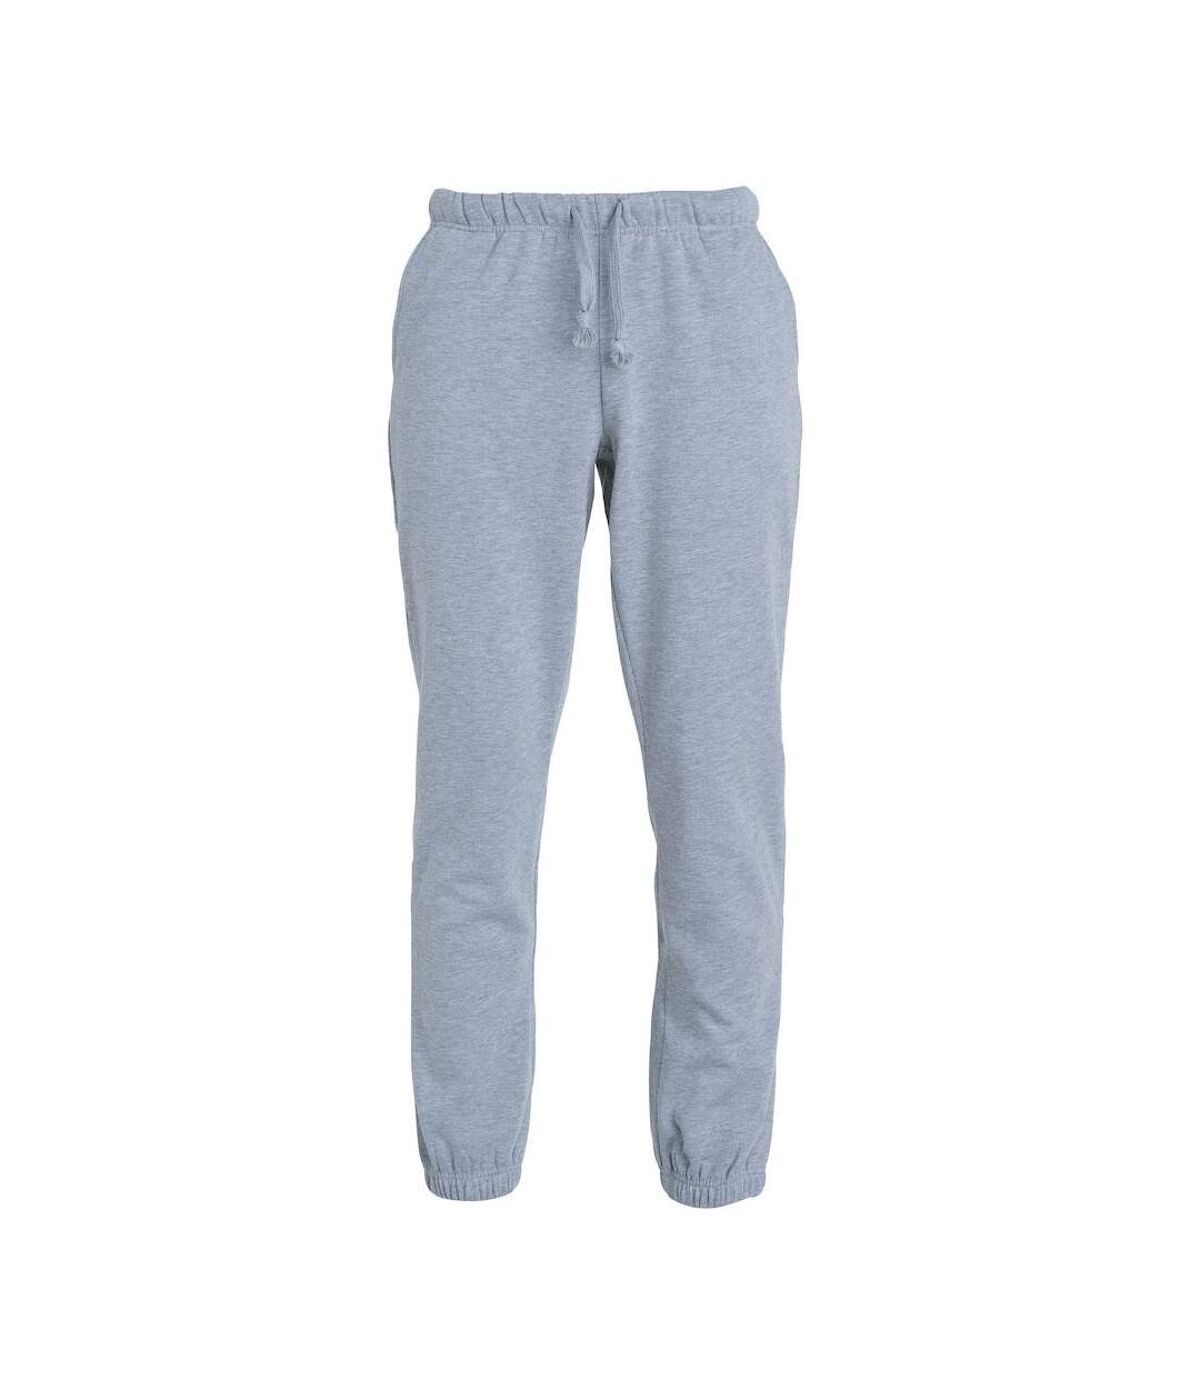 Clique Unisex Adult Basic Sweatpants (Gray Melange)